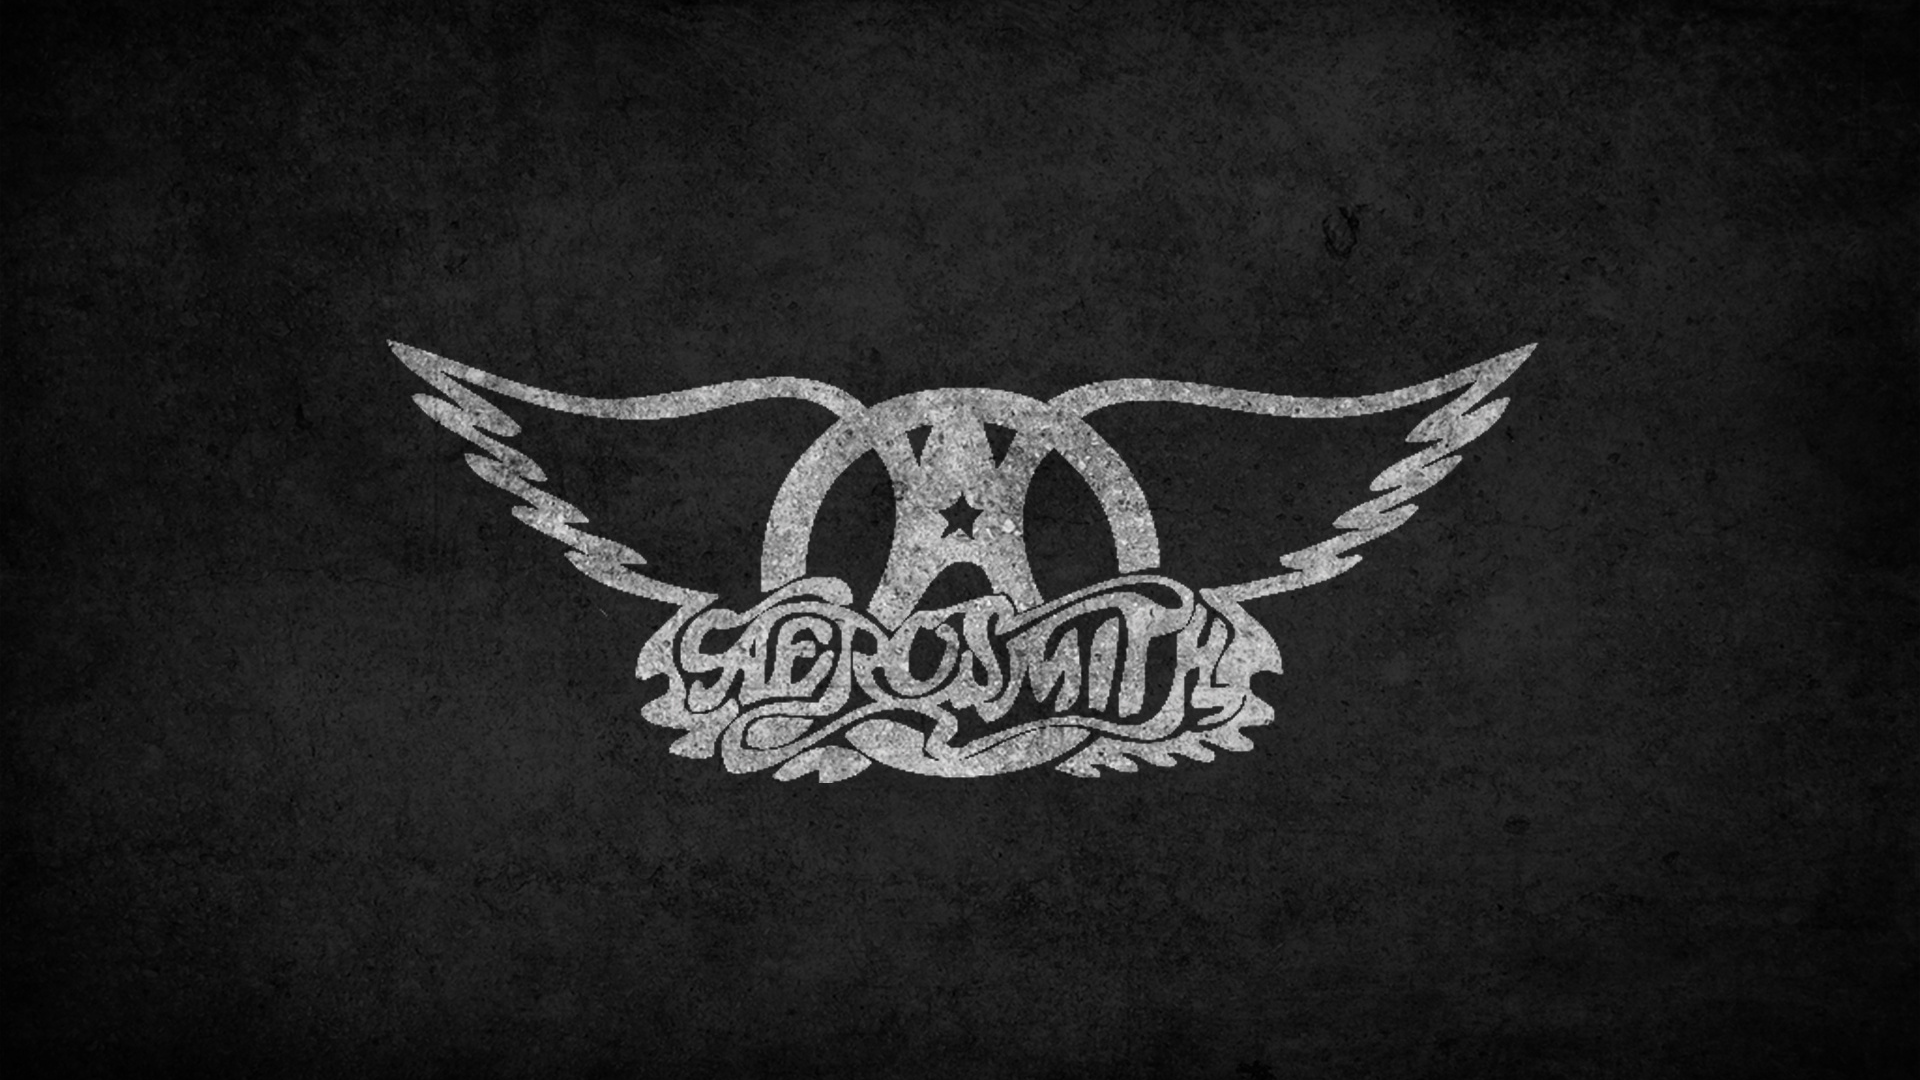 Aerosmith Wallpapers